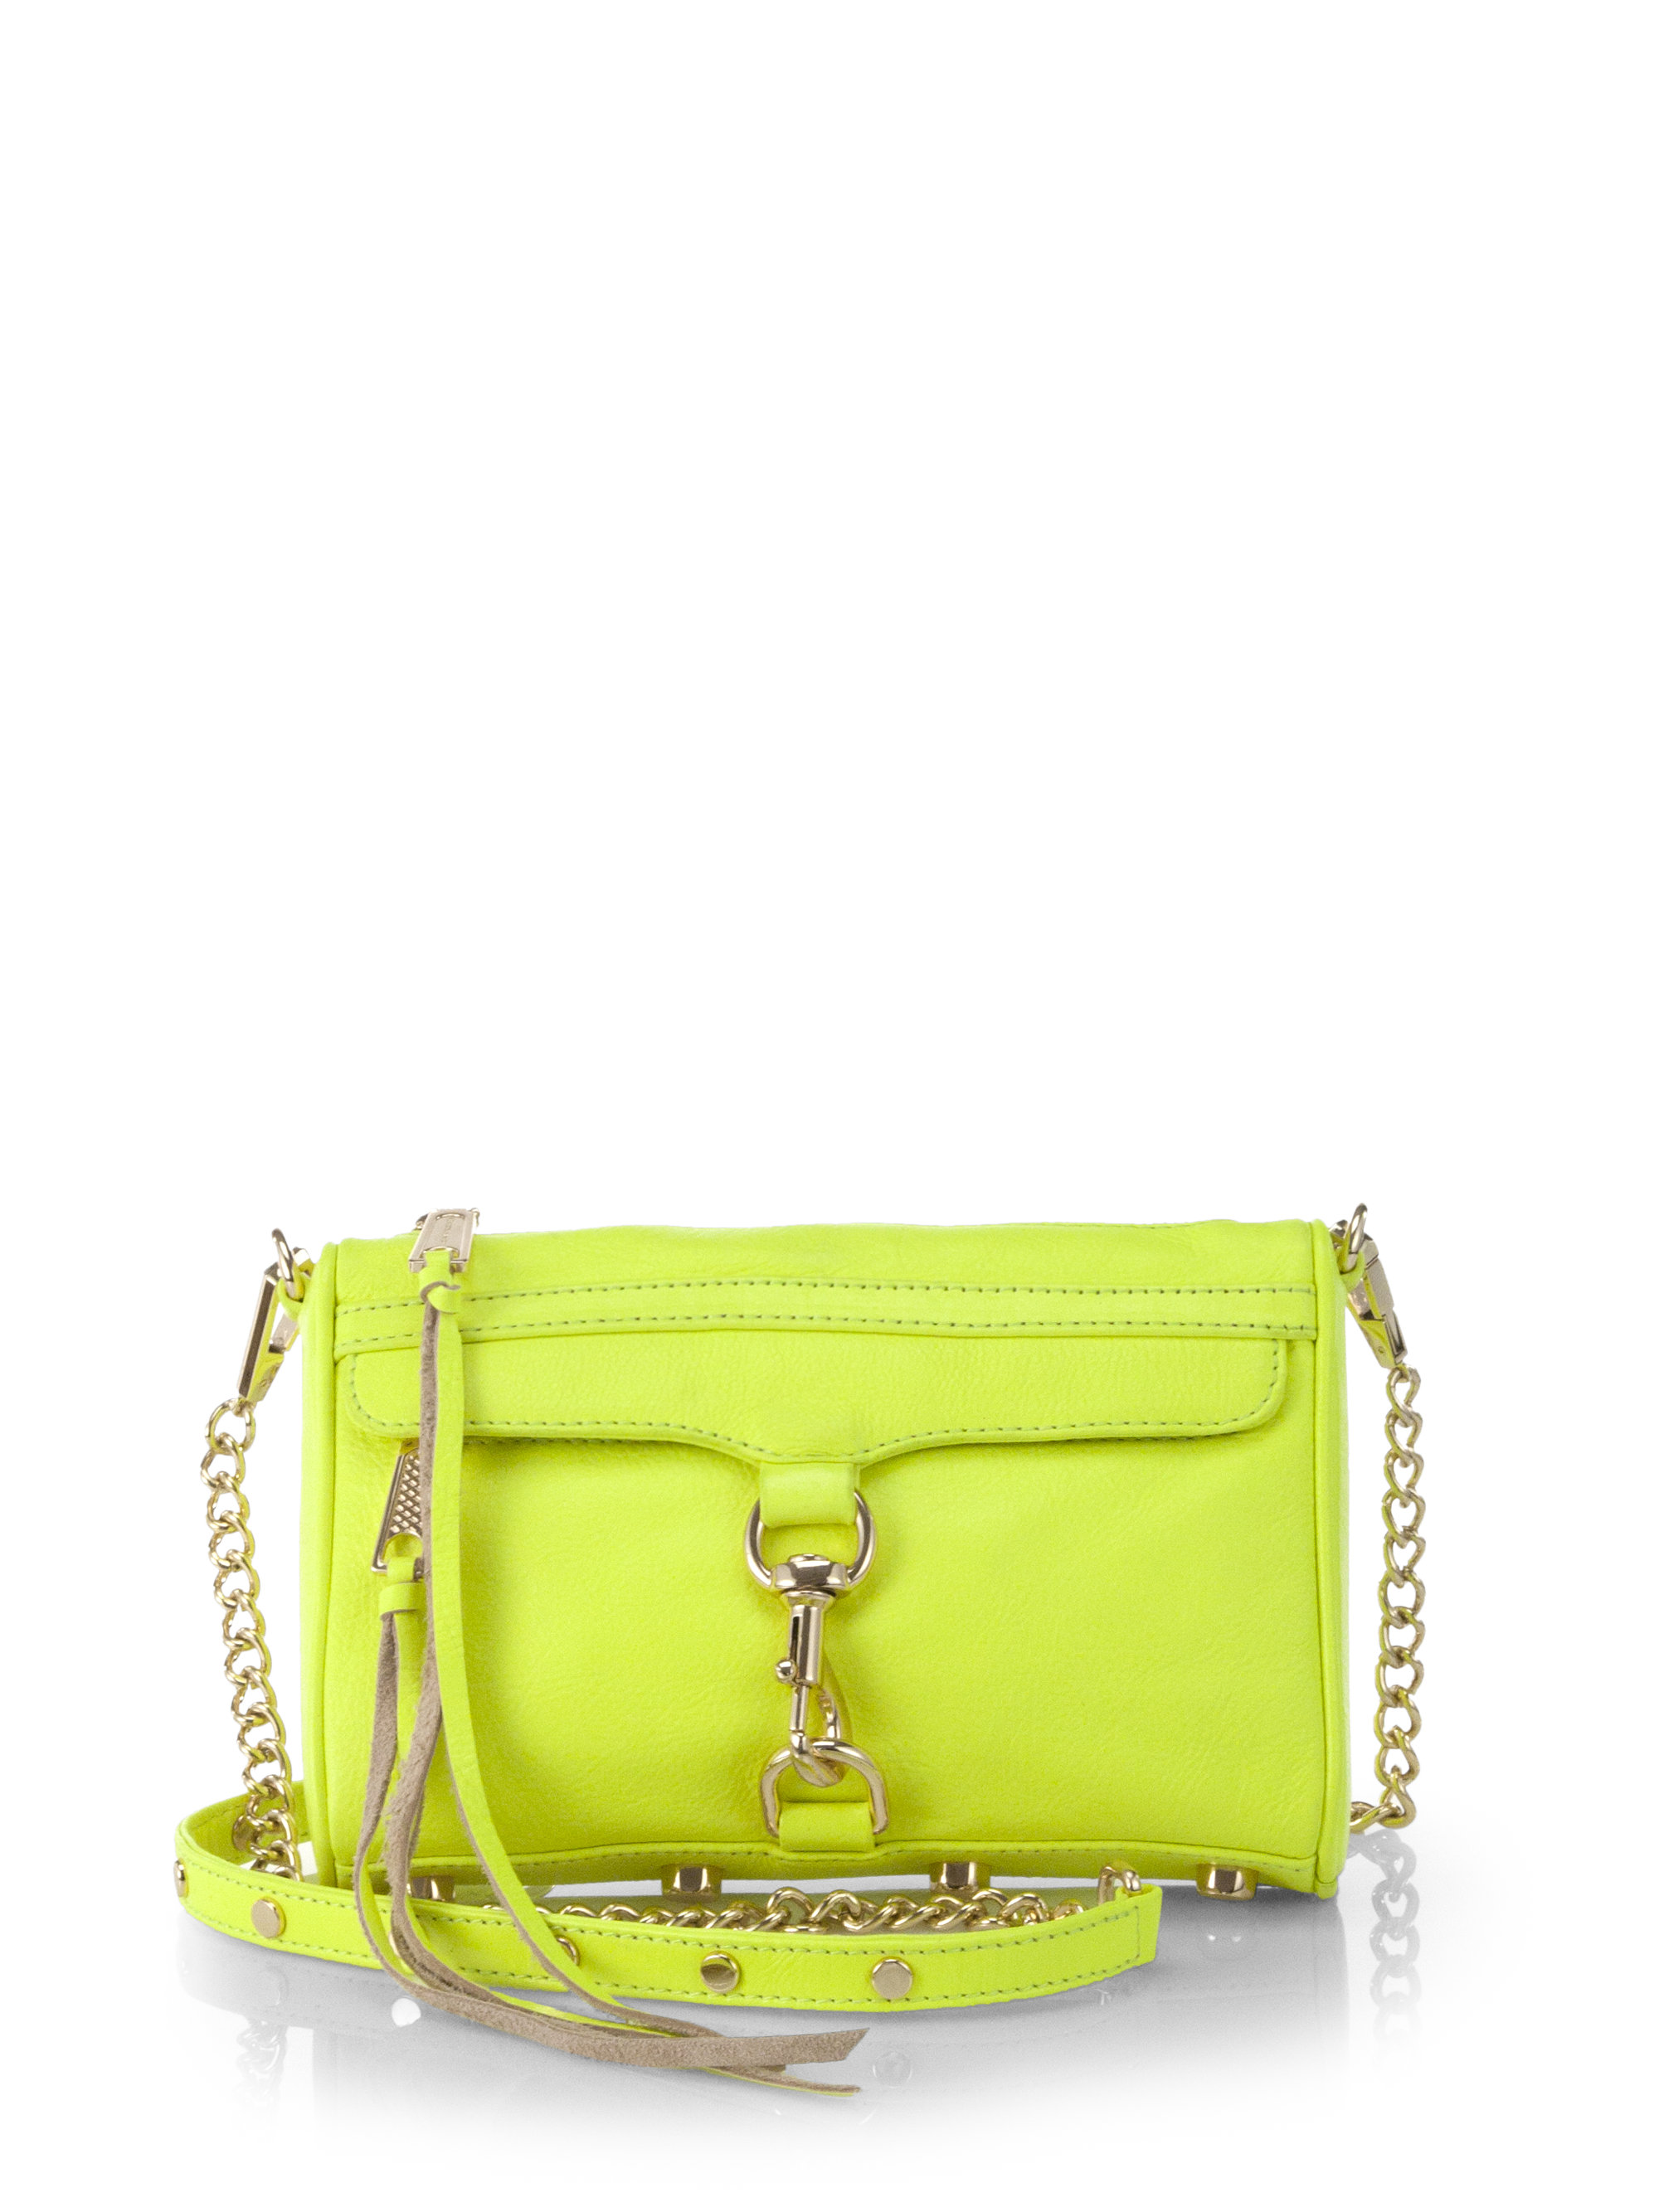 Rebecca Minkoff Mini Mac Crossbody Bag in Neon Yellow (Yellow) - Lyst